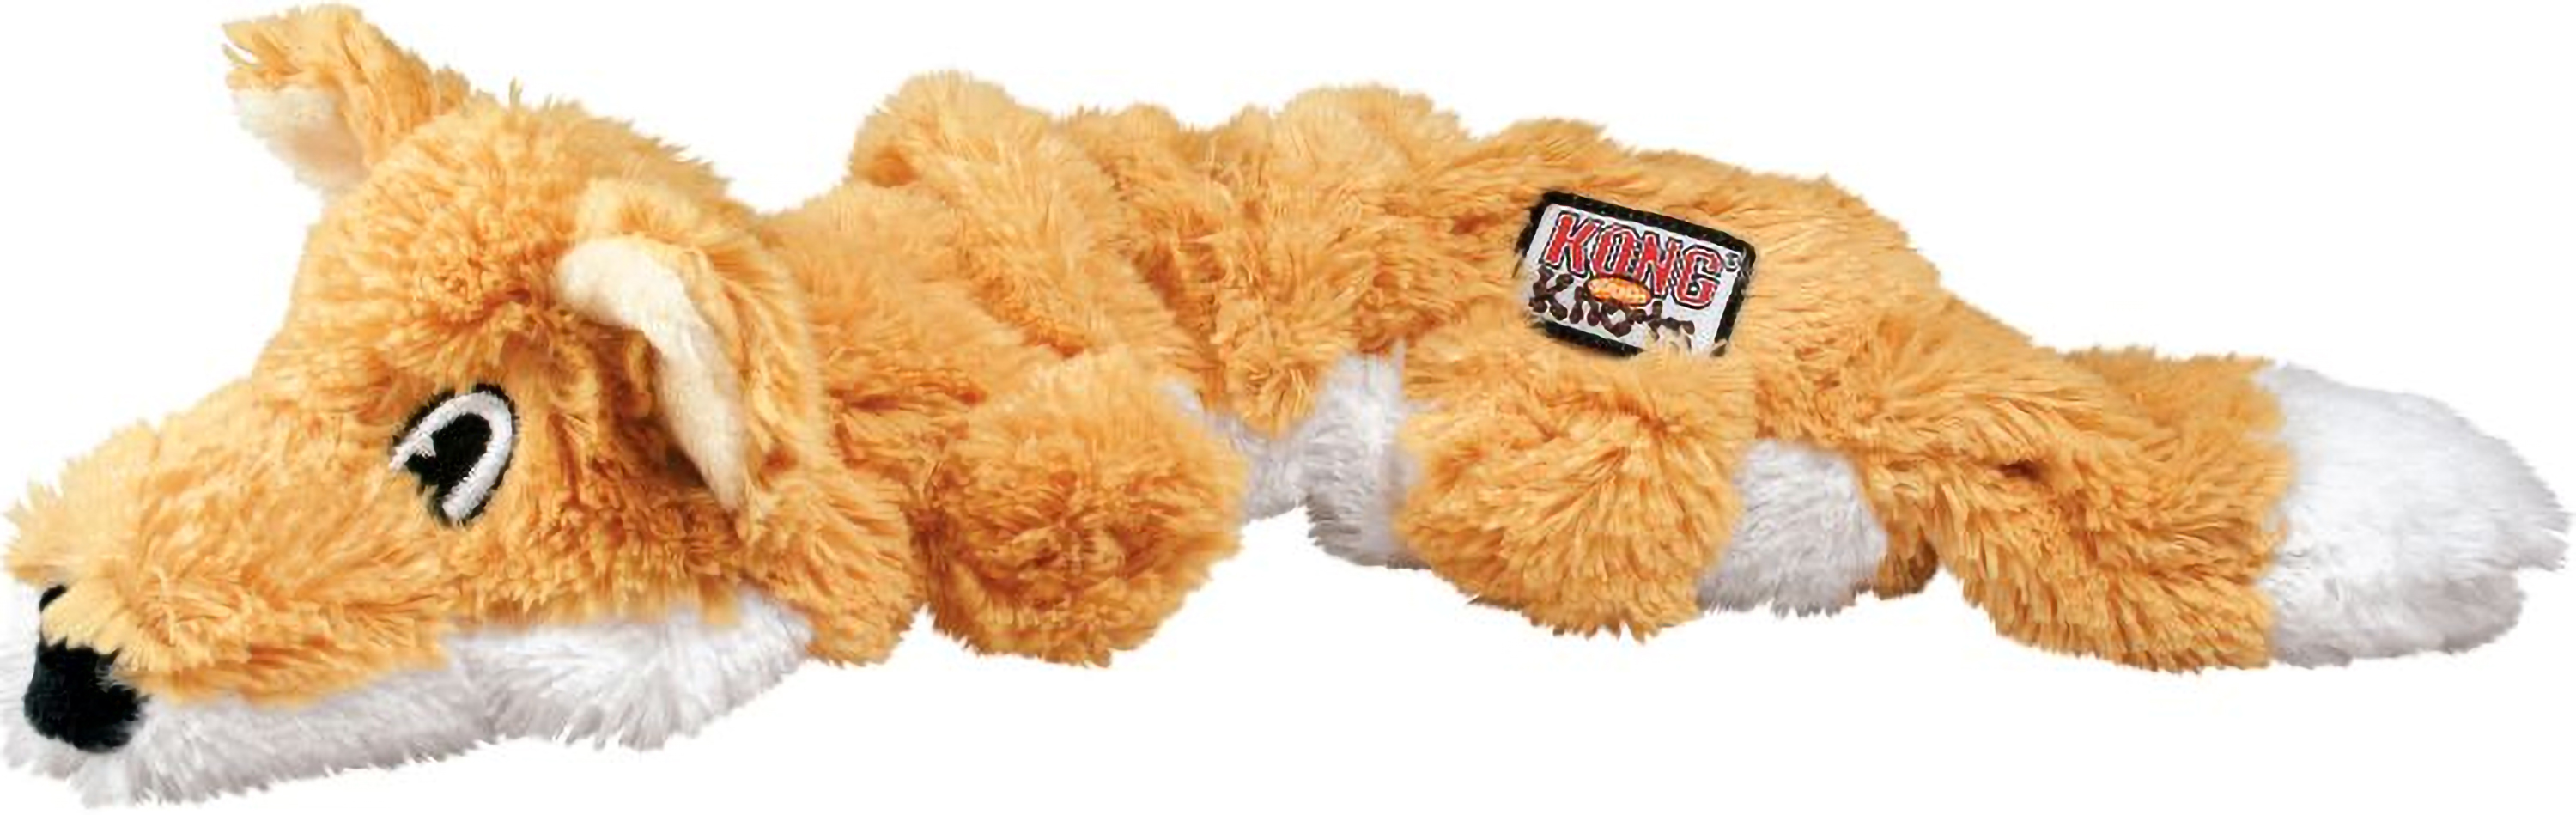 Hundleksak Kong Scrunch Knots Fox M/L